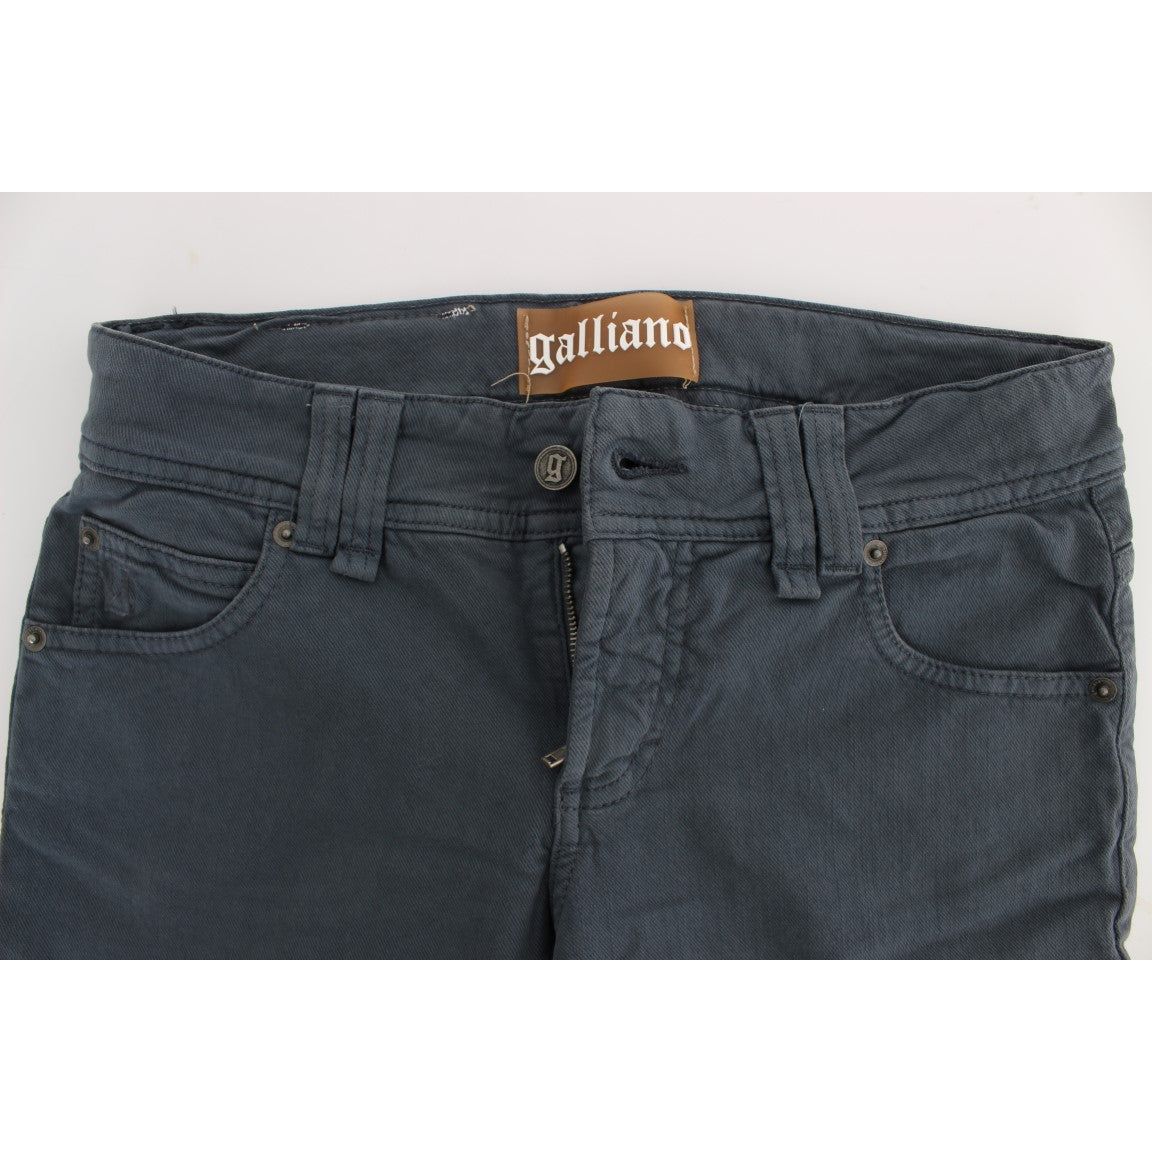 John Galliano Elegant Slim Fit Bootcut Jeans Jeans & Pants blue-cotton-blend-slim-fit-bootcut-jeans-2 330188-blue-cotton-blend-slim-fit-bootcut-jeans-3-4.jpg